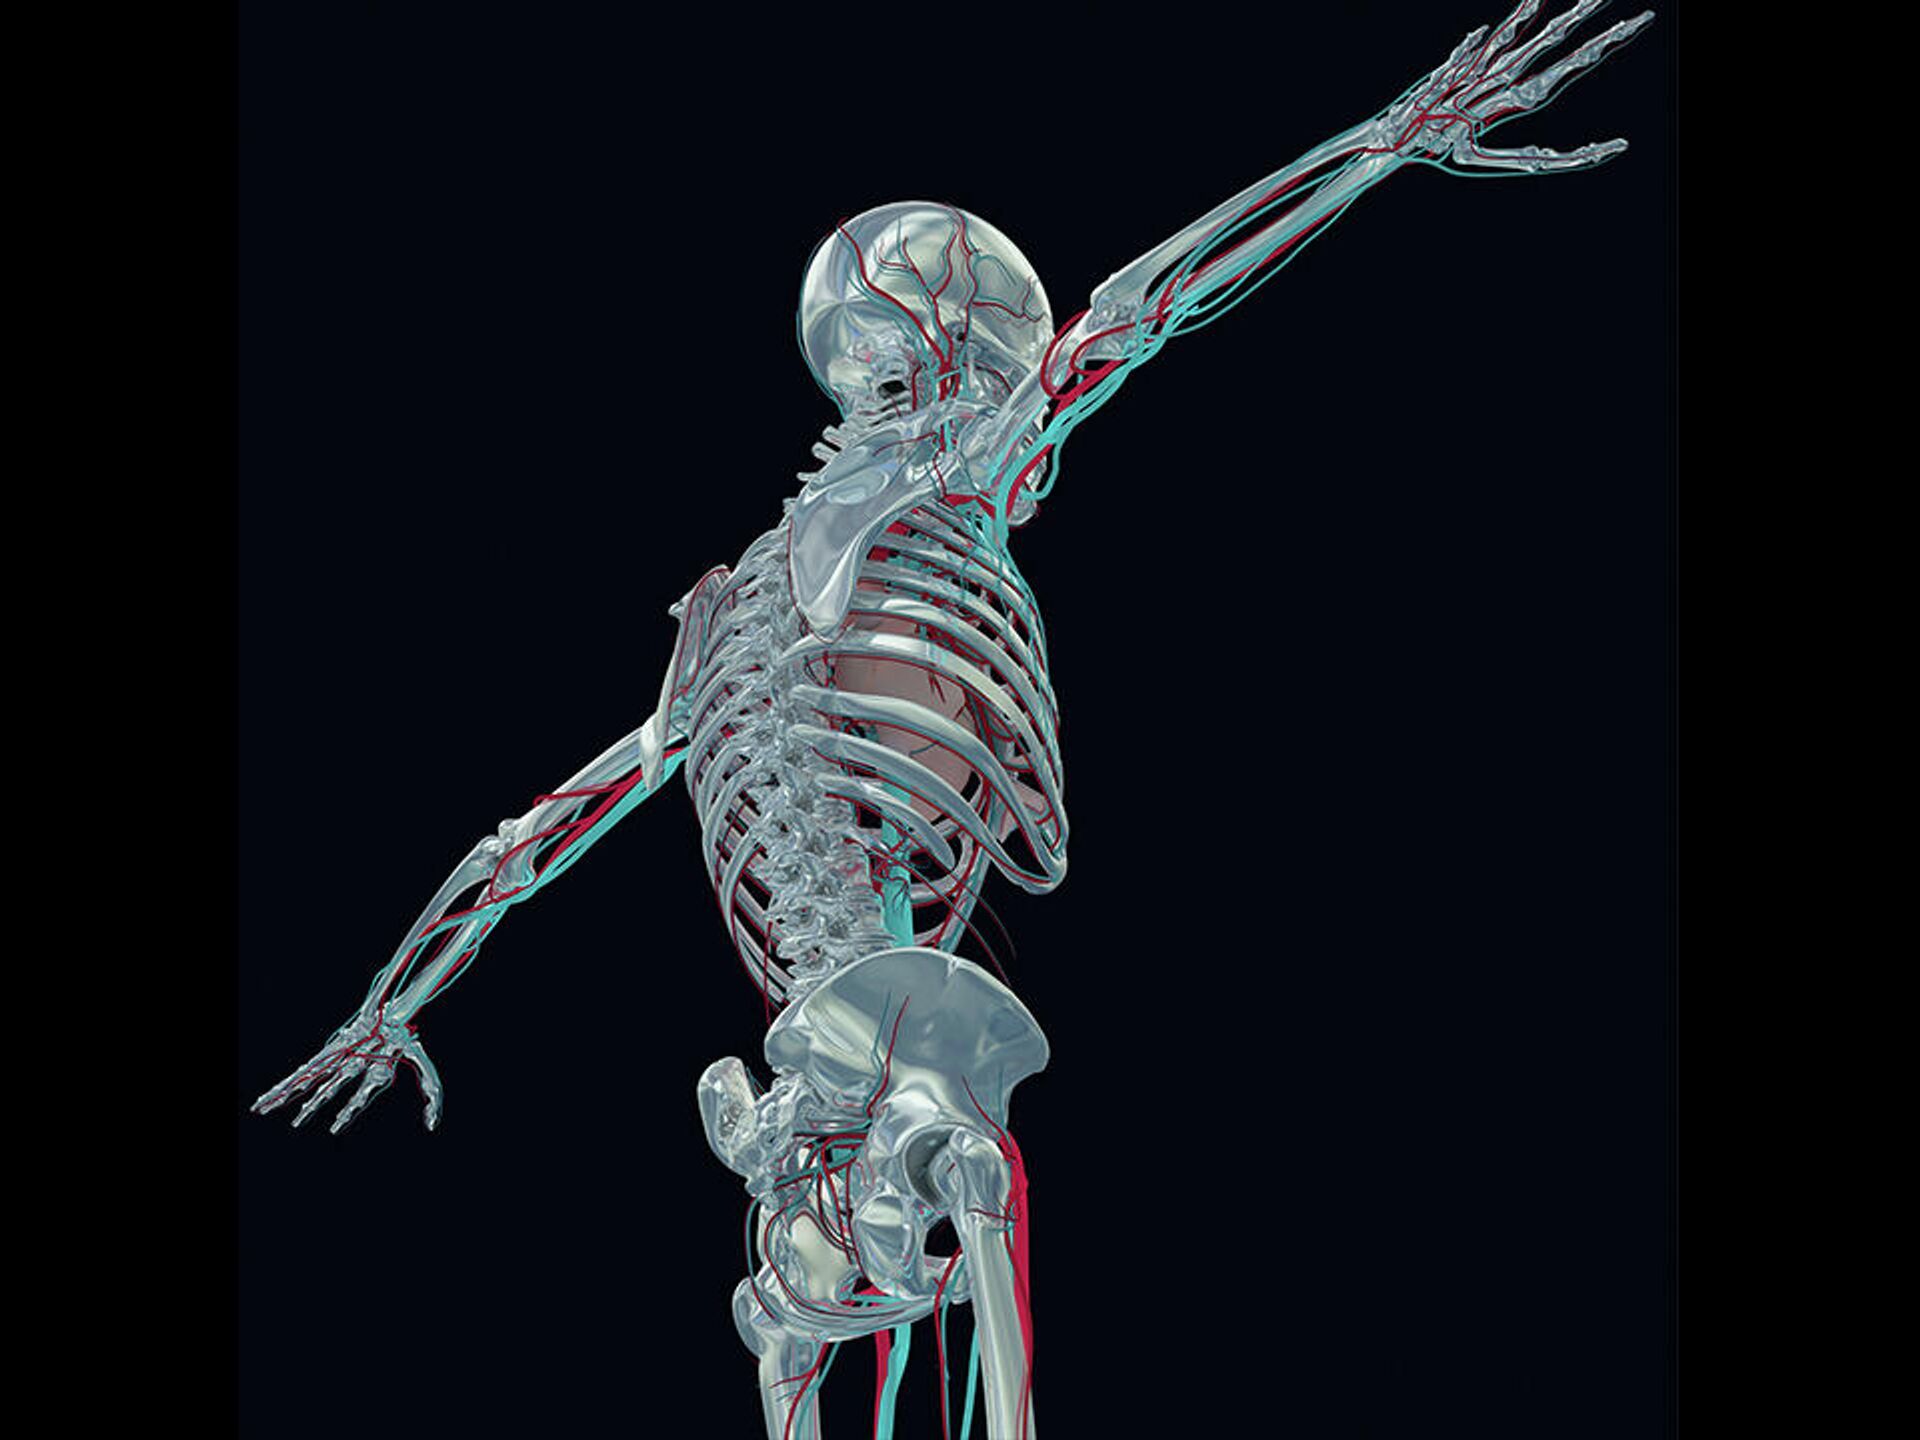 Строение Скелета Человека Фото С Описанием